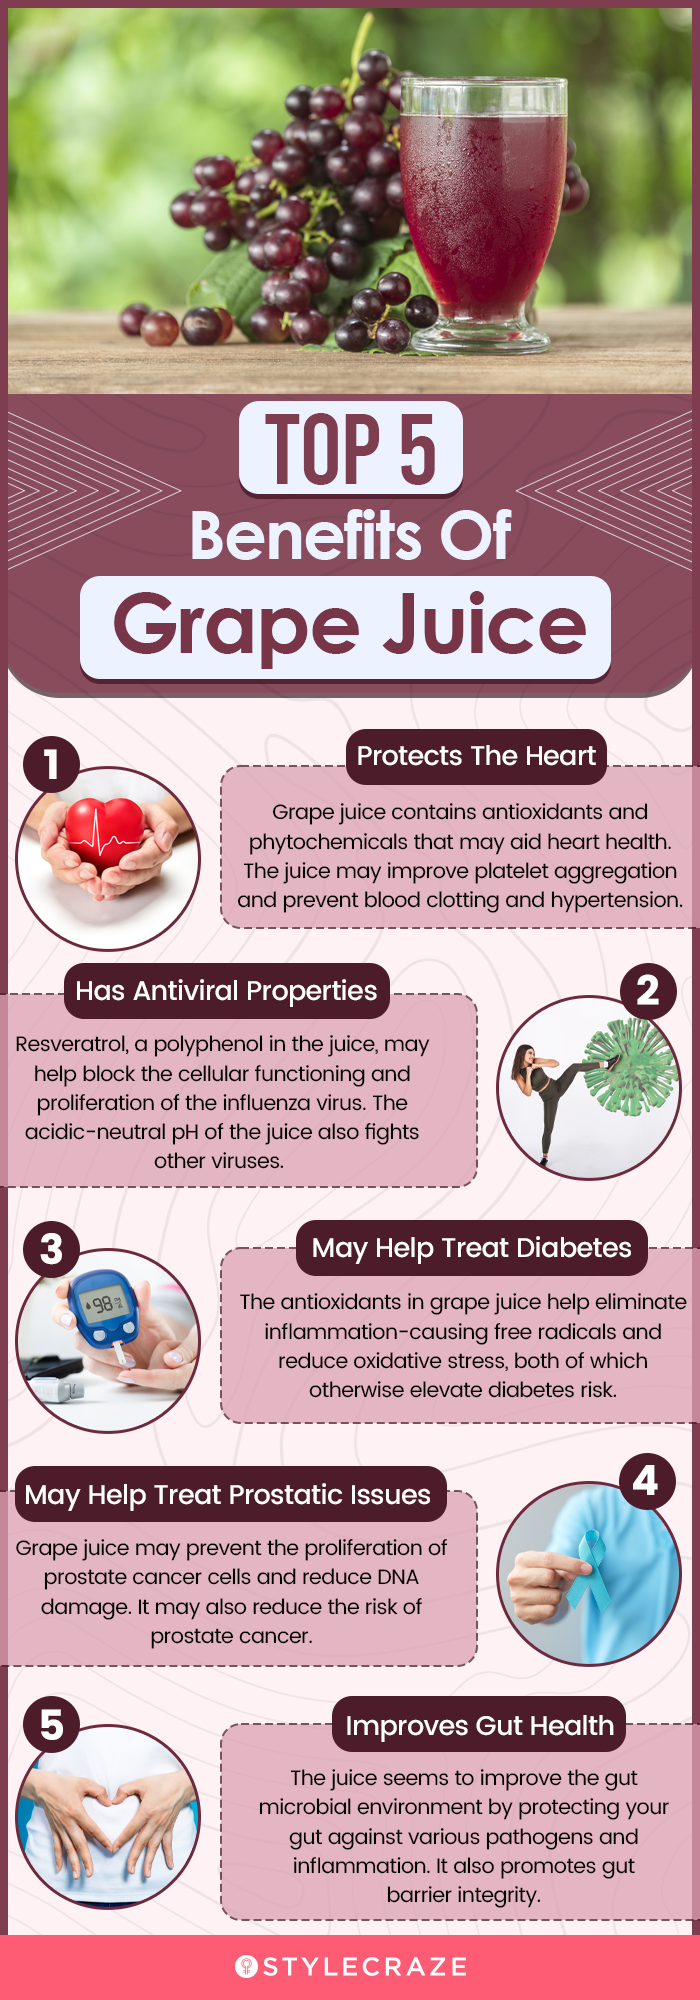 top 5 benefits of grape juice (infographic)